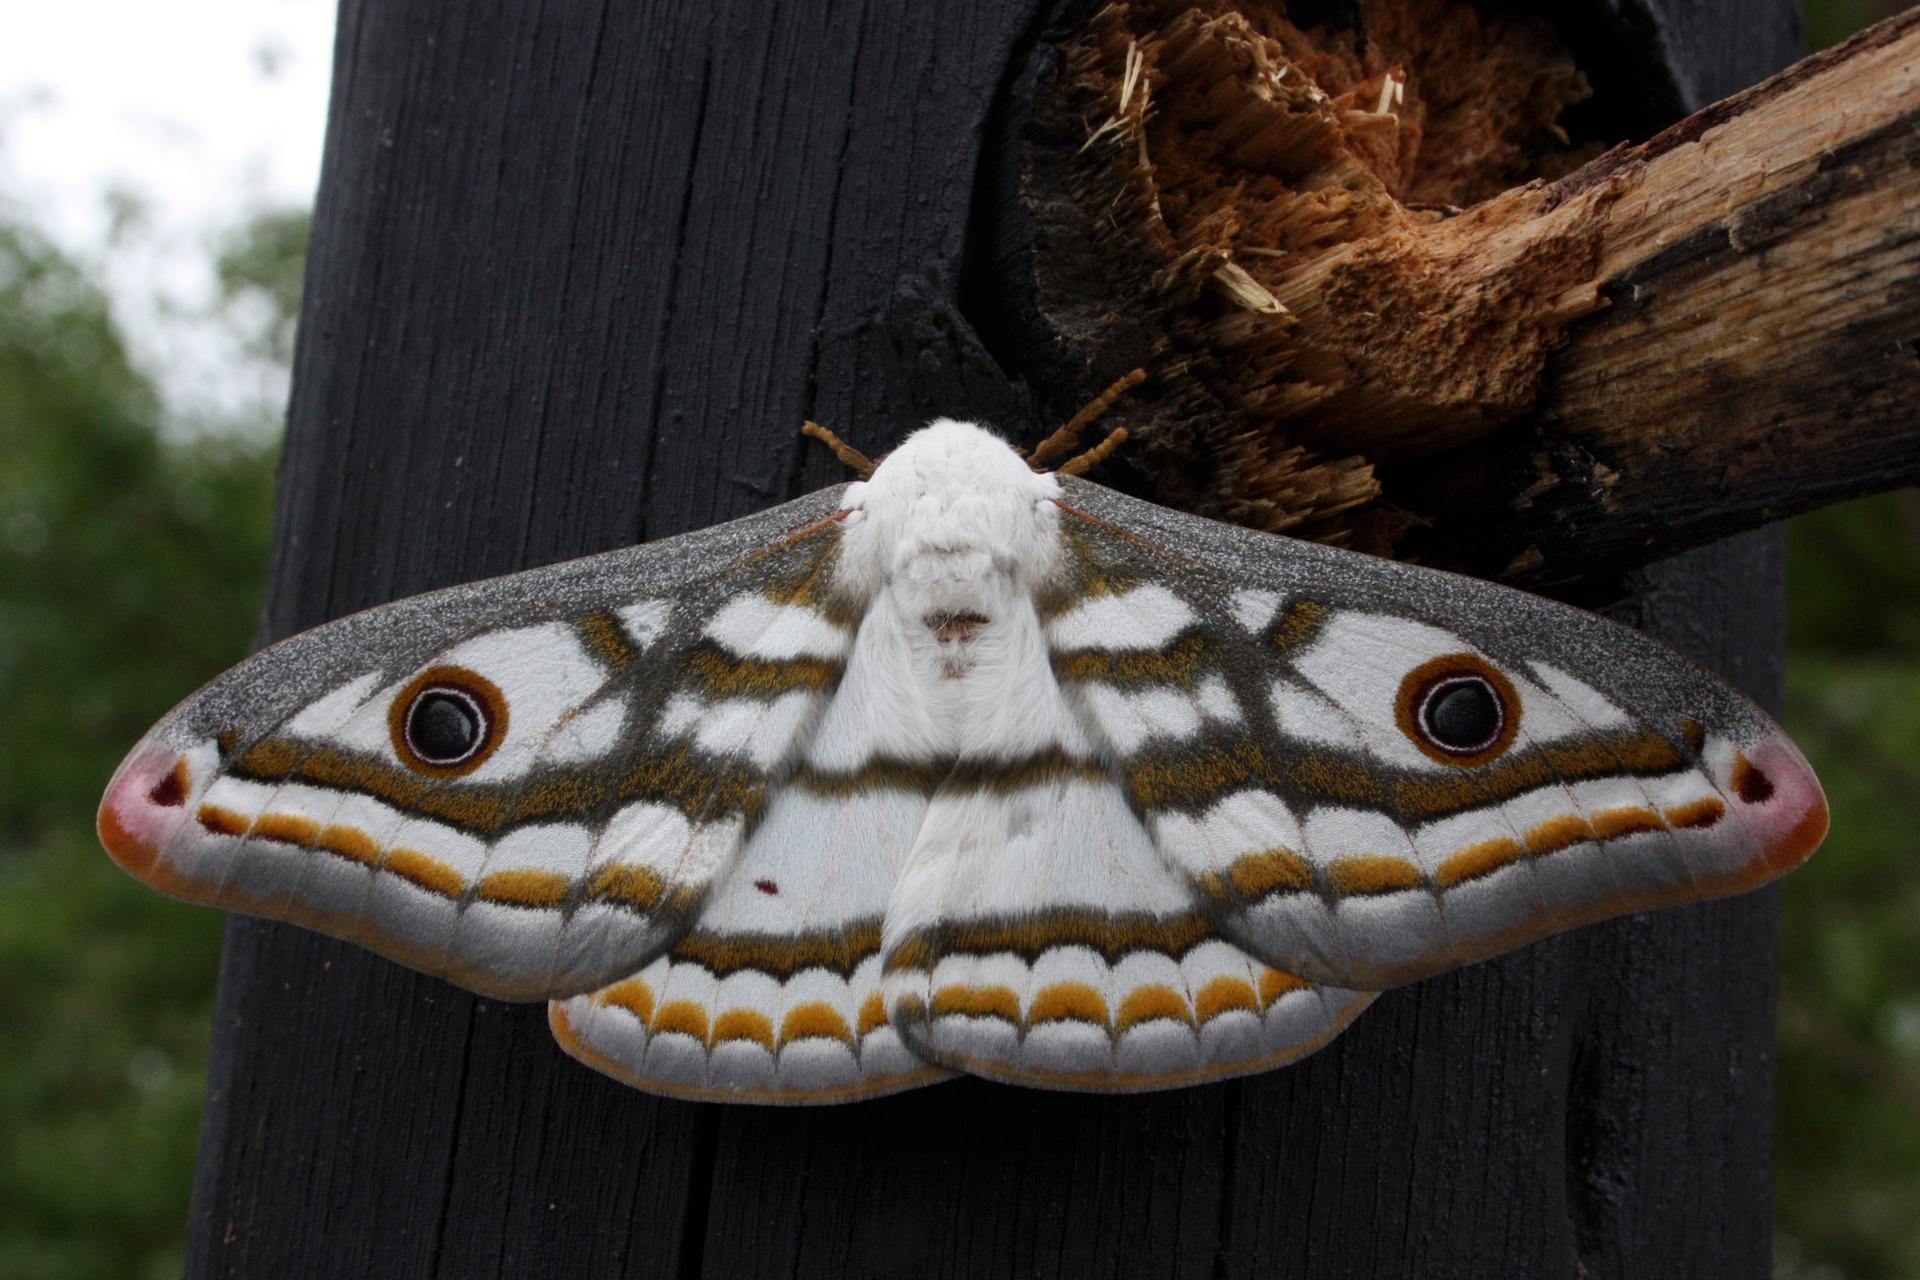 A Marbled emperor moth